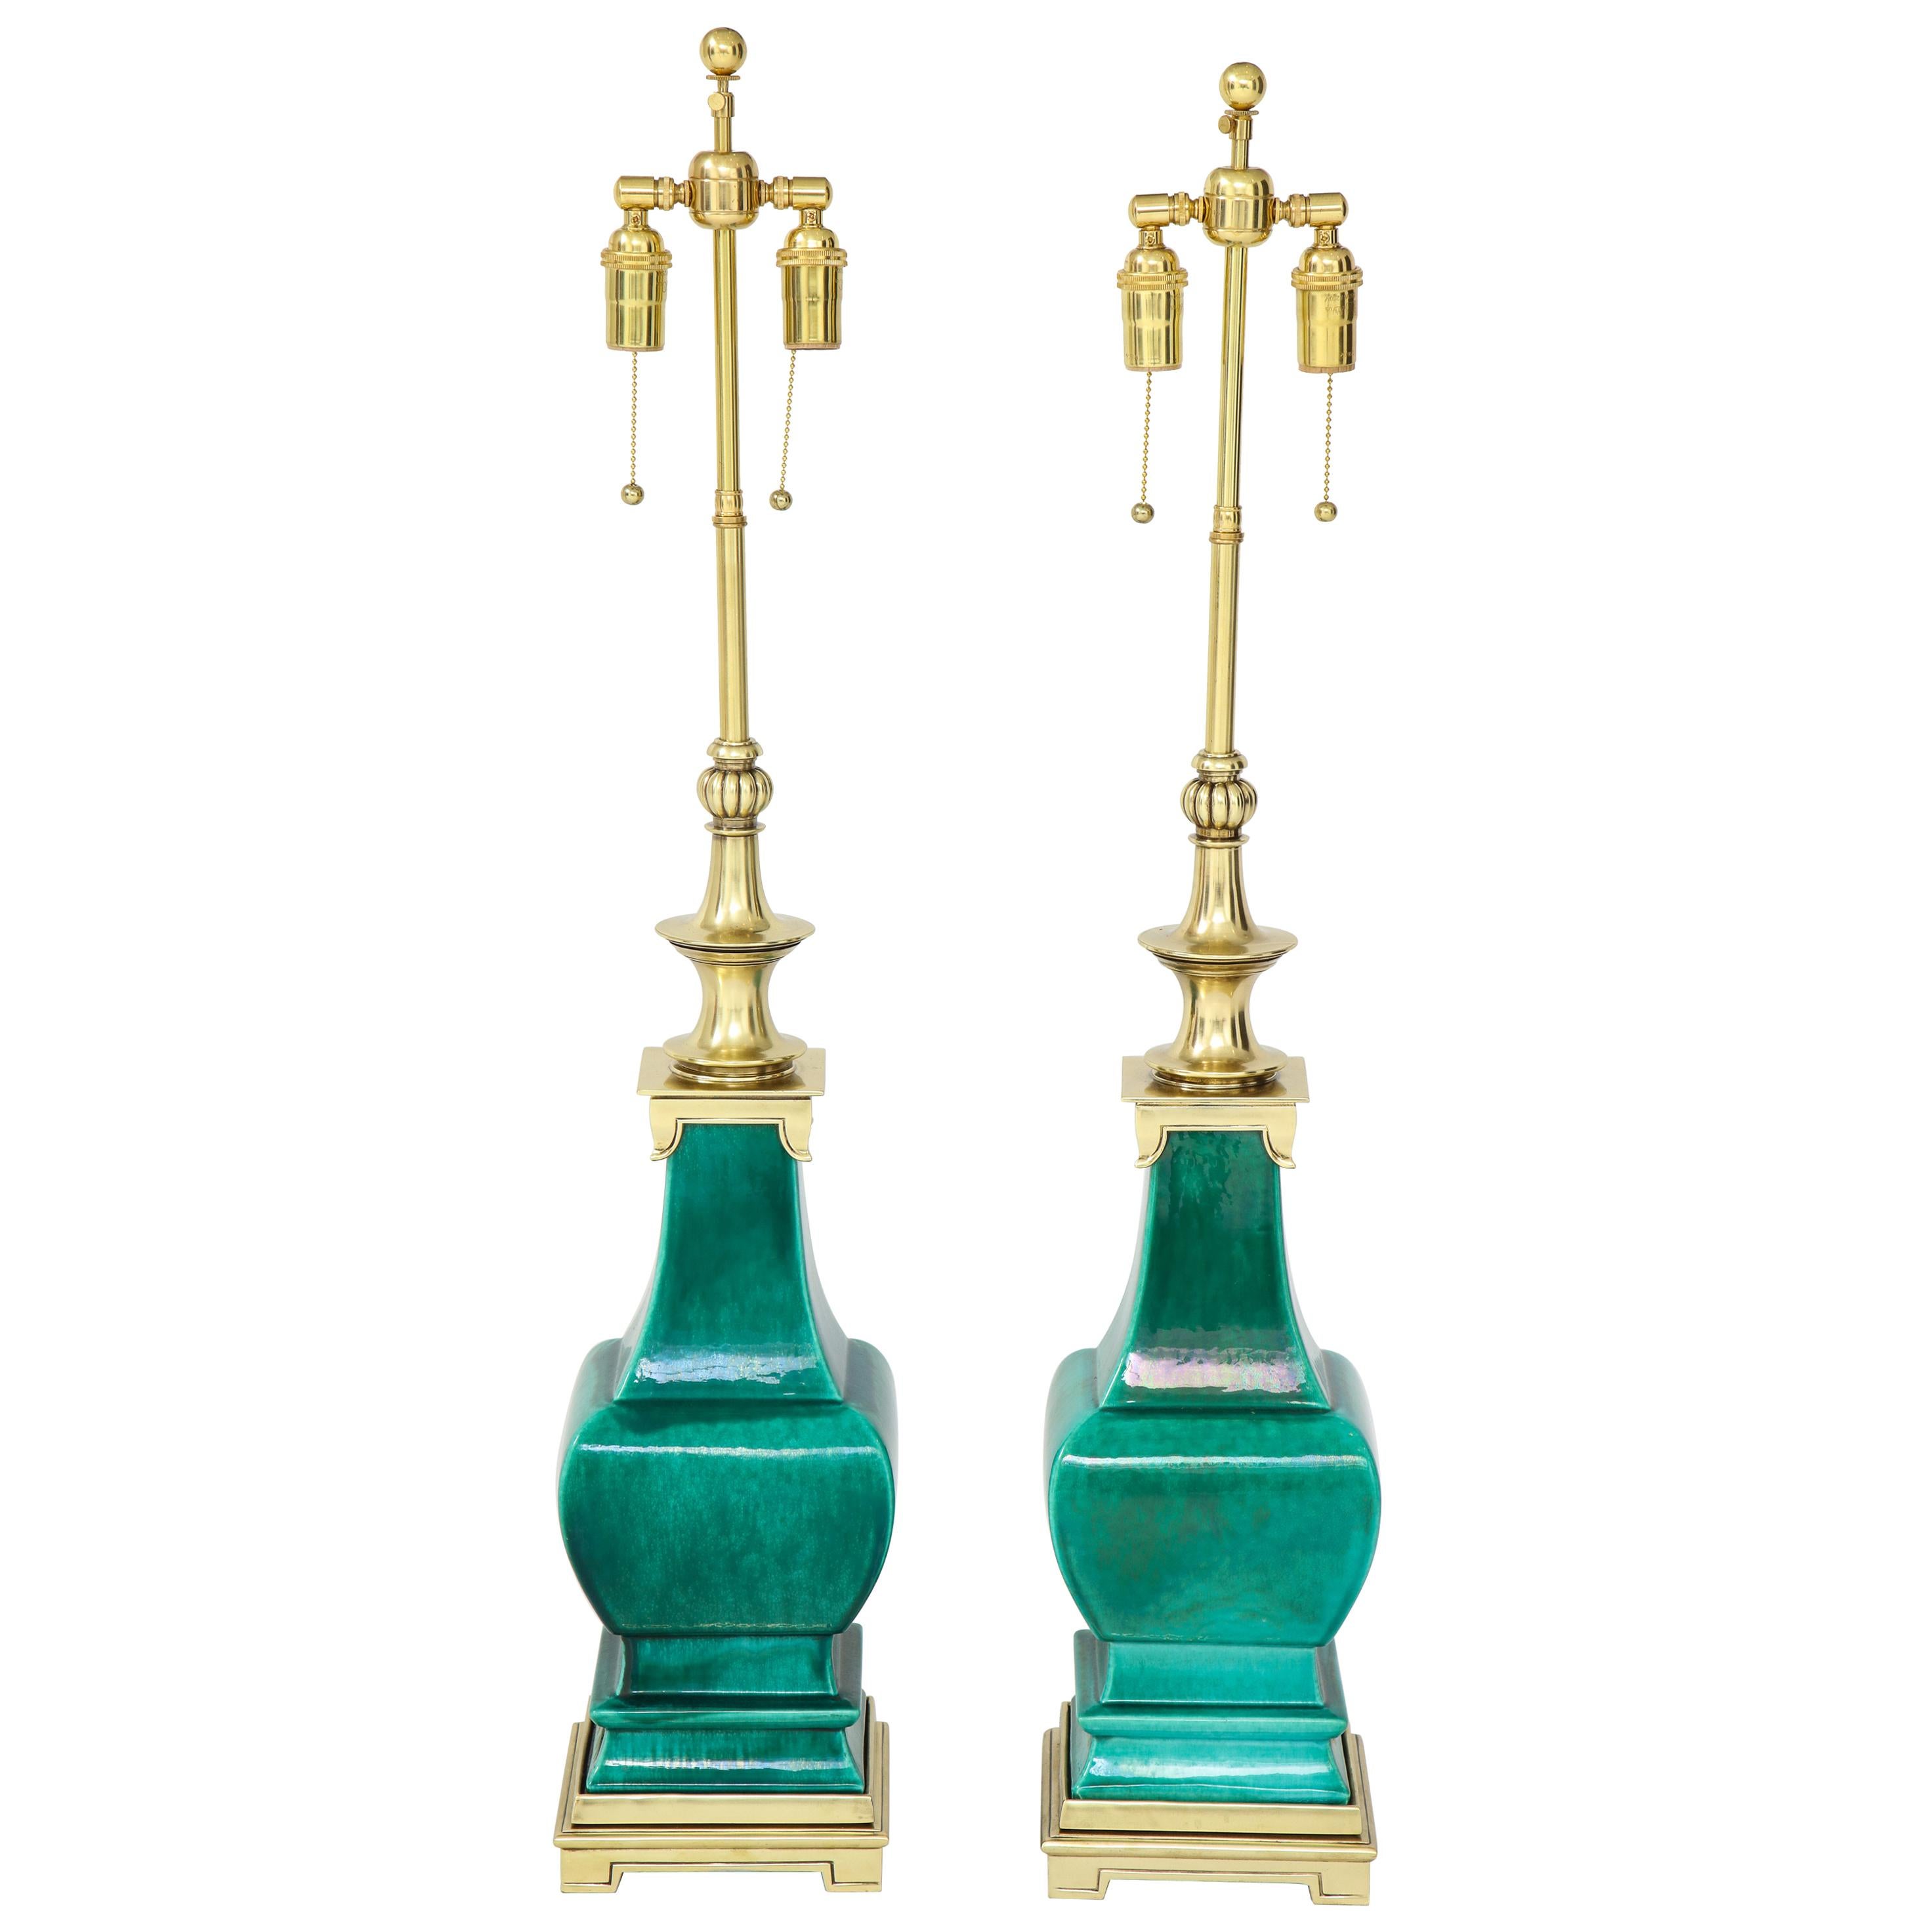 Pair of Jade Green Ceramic Lamps by Stiffel